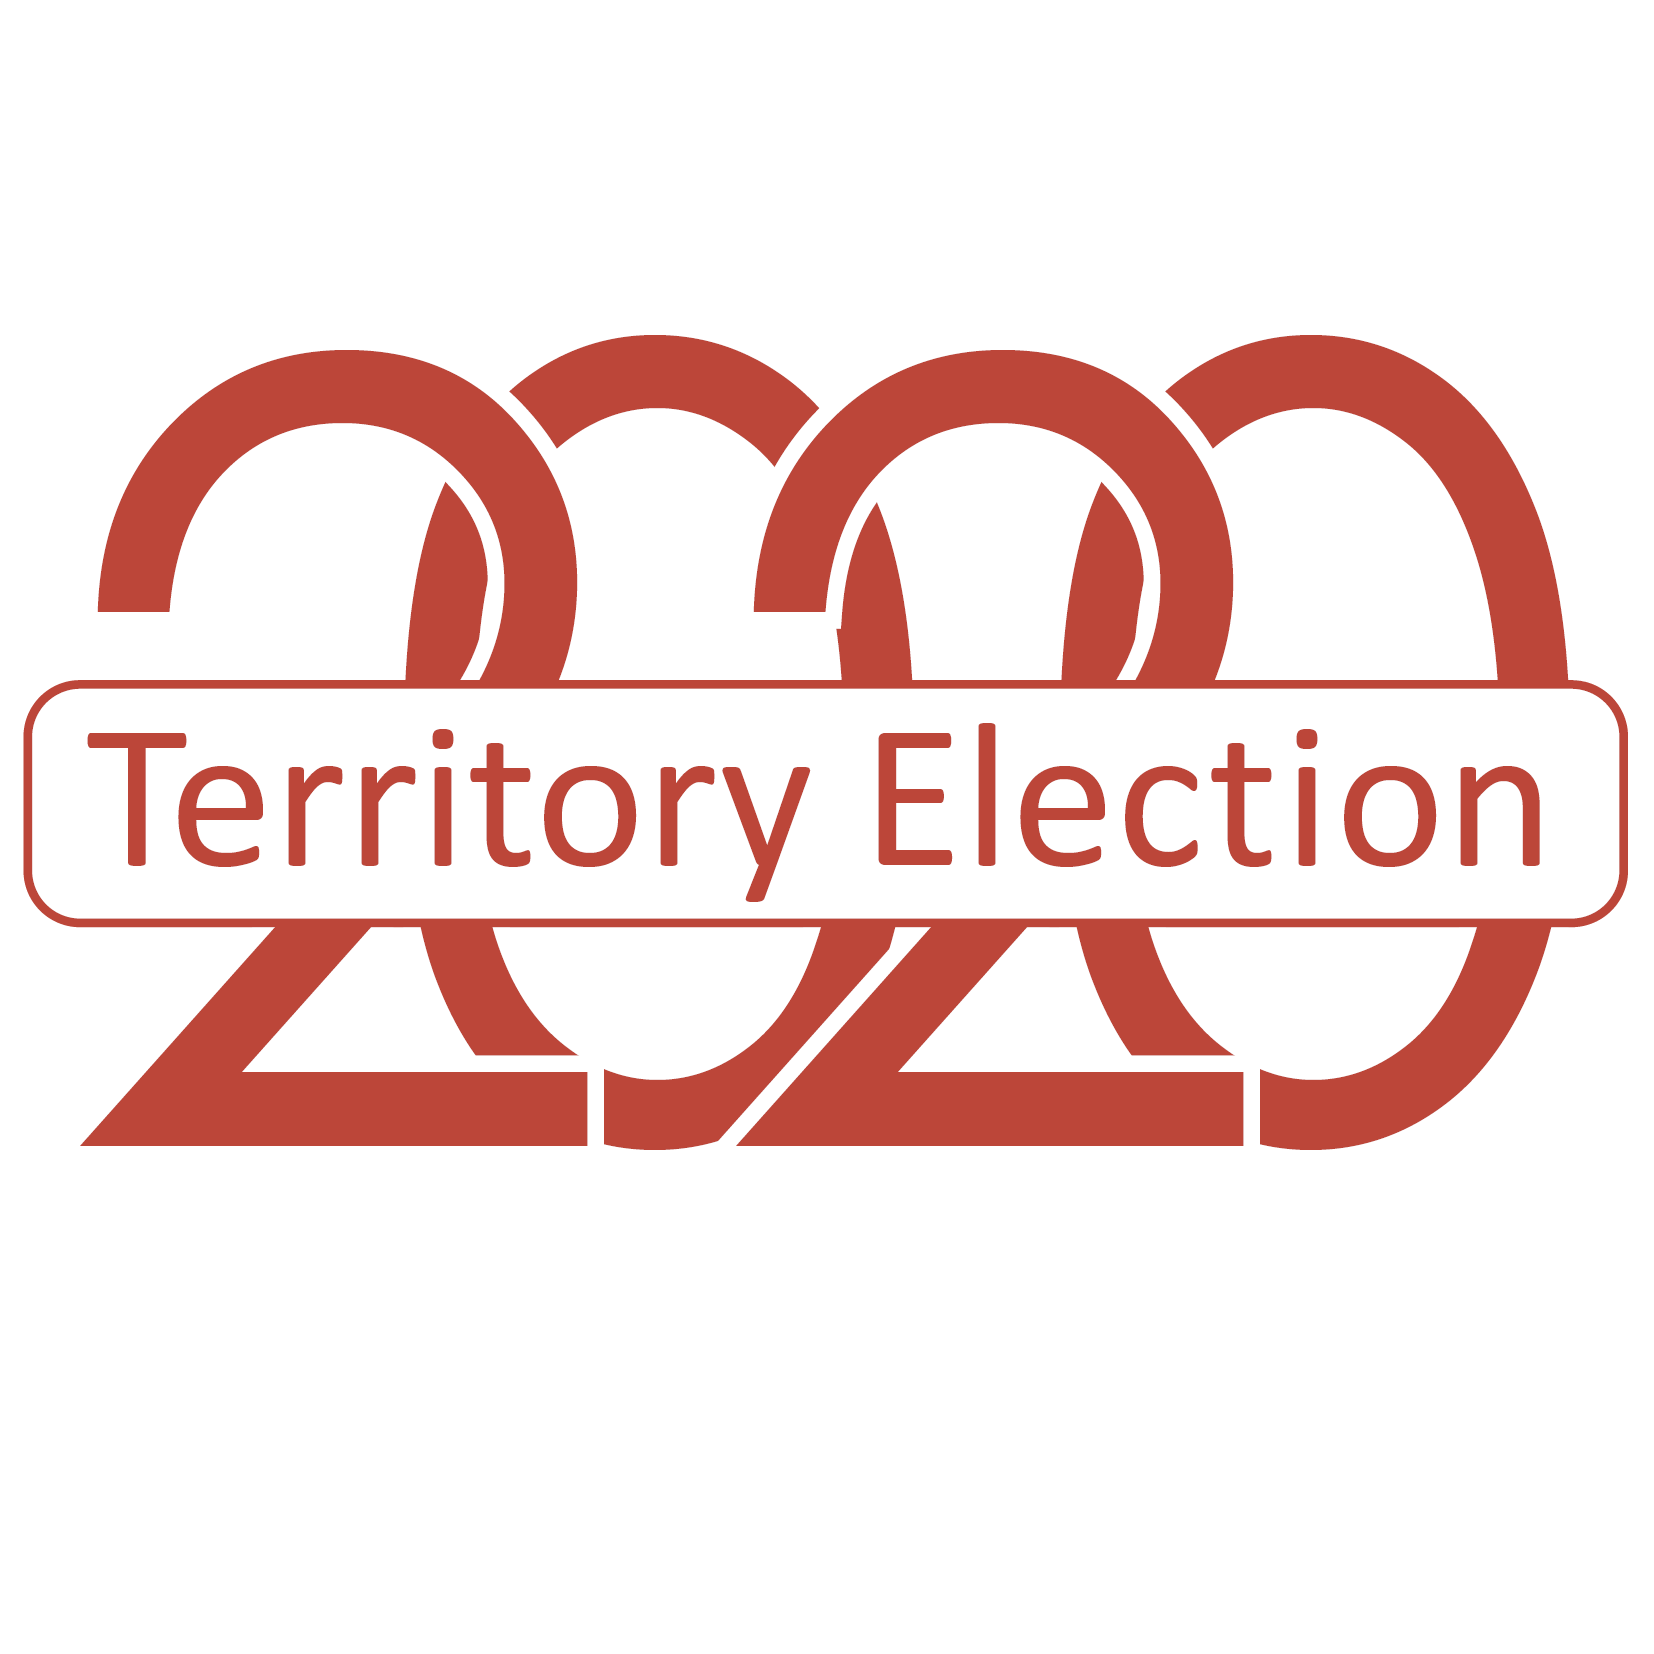 2020 Territory Election logo